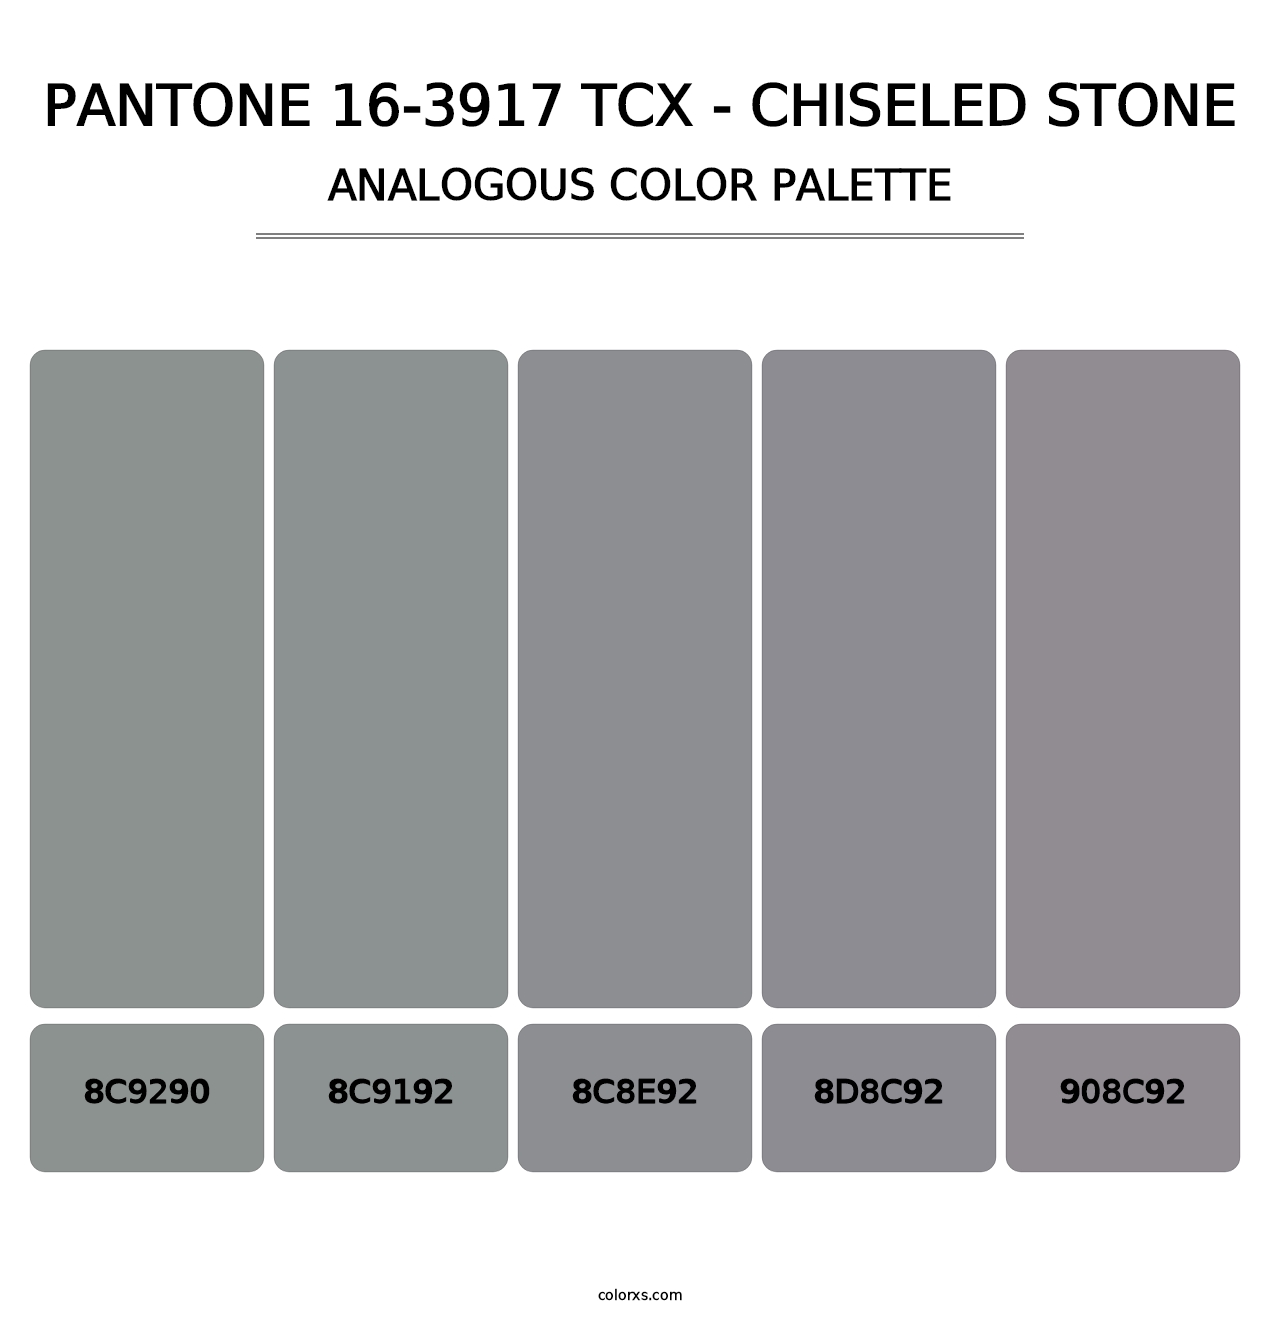 PANTONE 16-3917 TCX - Chiseled Stone - Analogous Color Palette